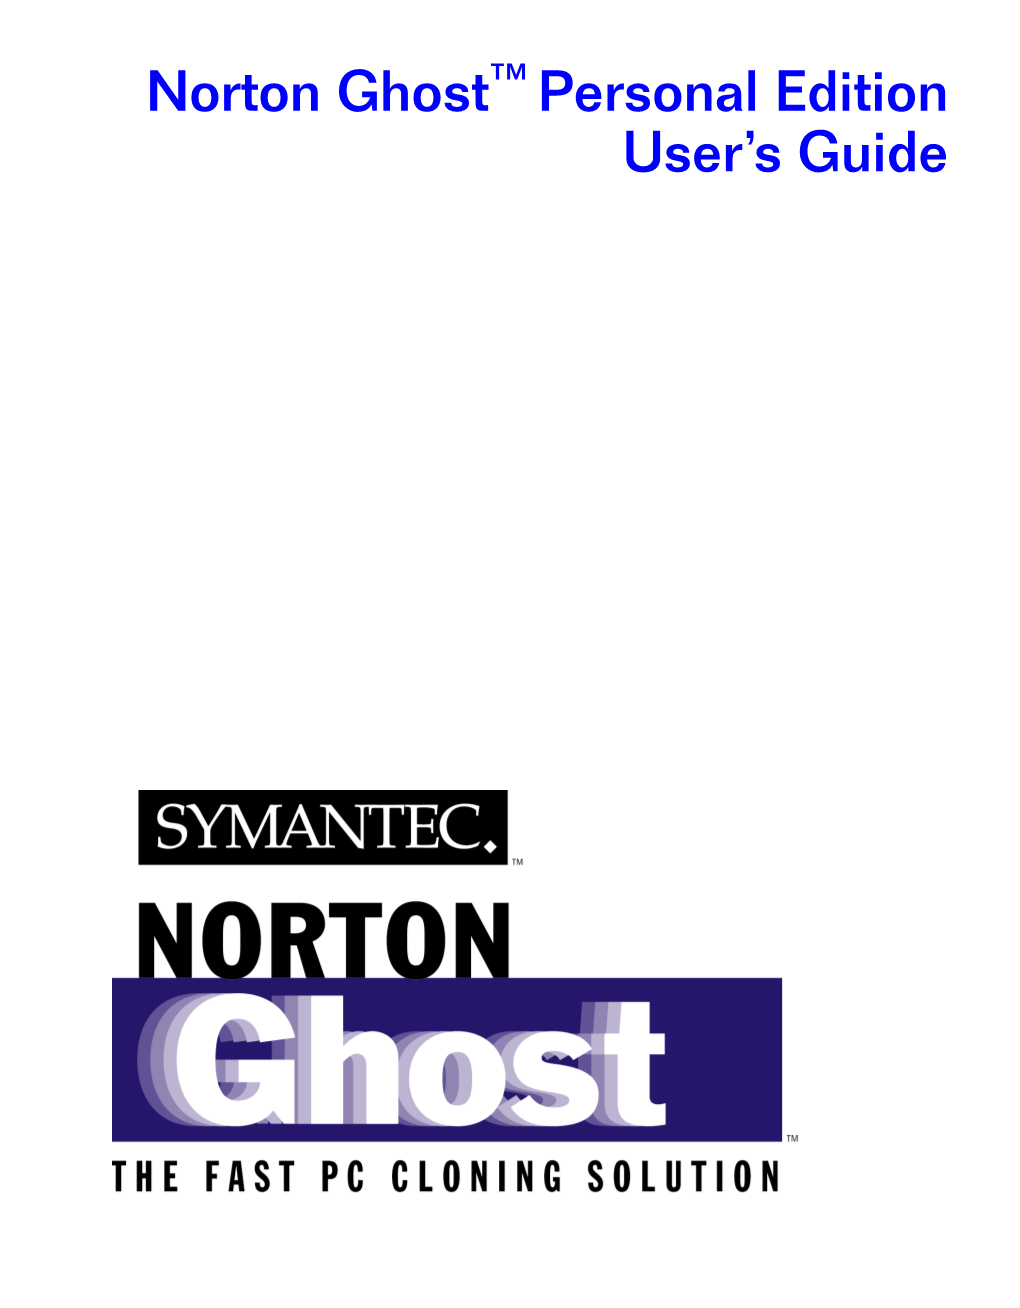 Norton Ghost Personal Edition User's Guide